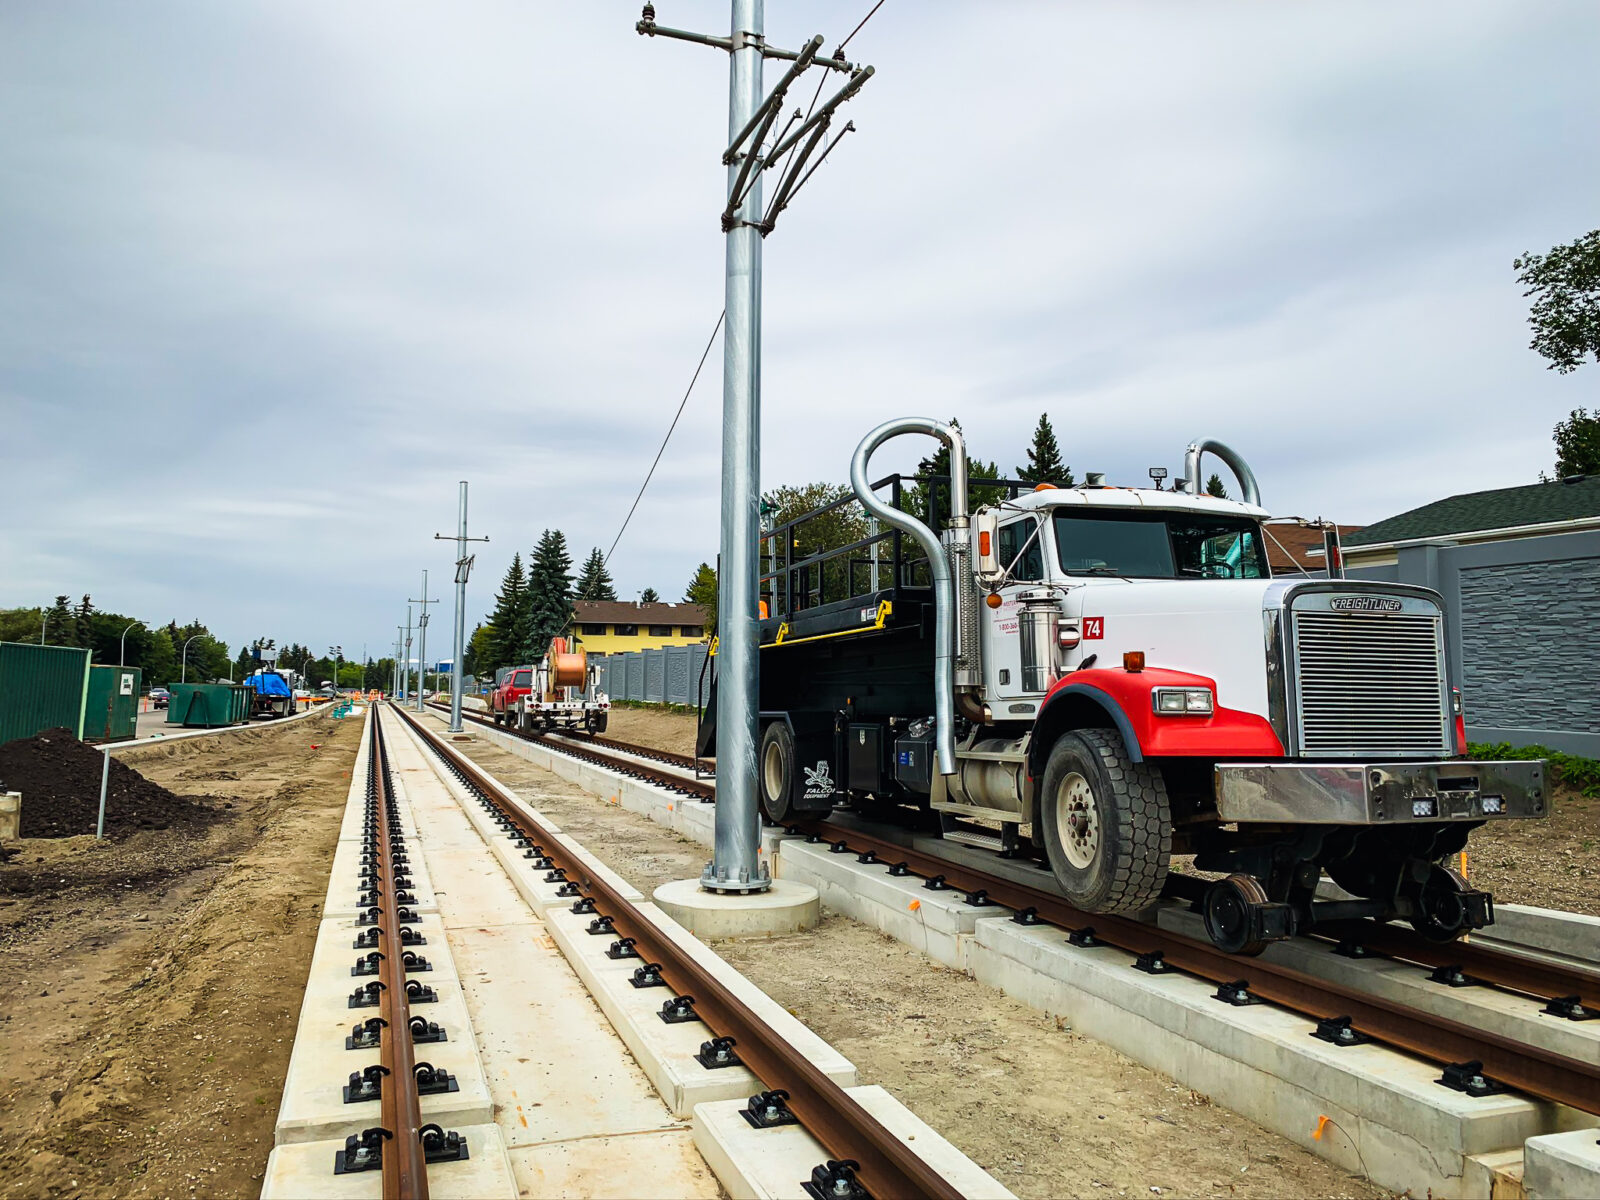 edmonton light rail transit valley line expansion (LRT)